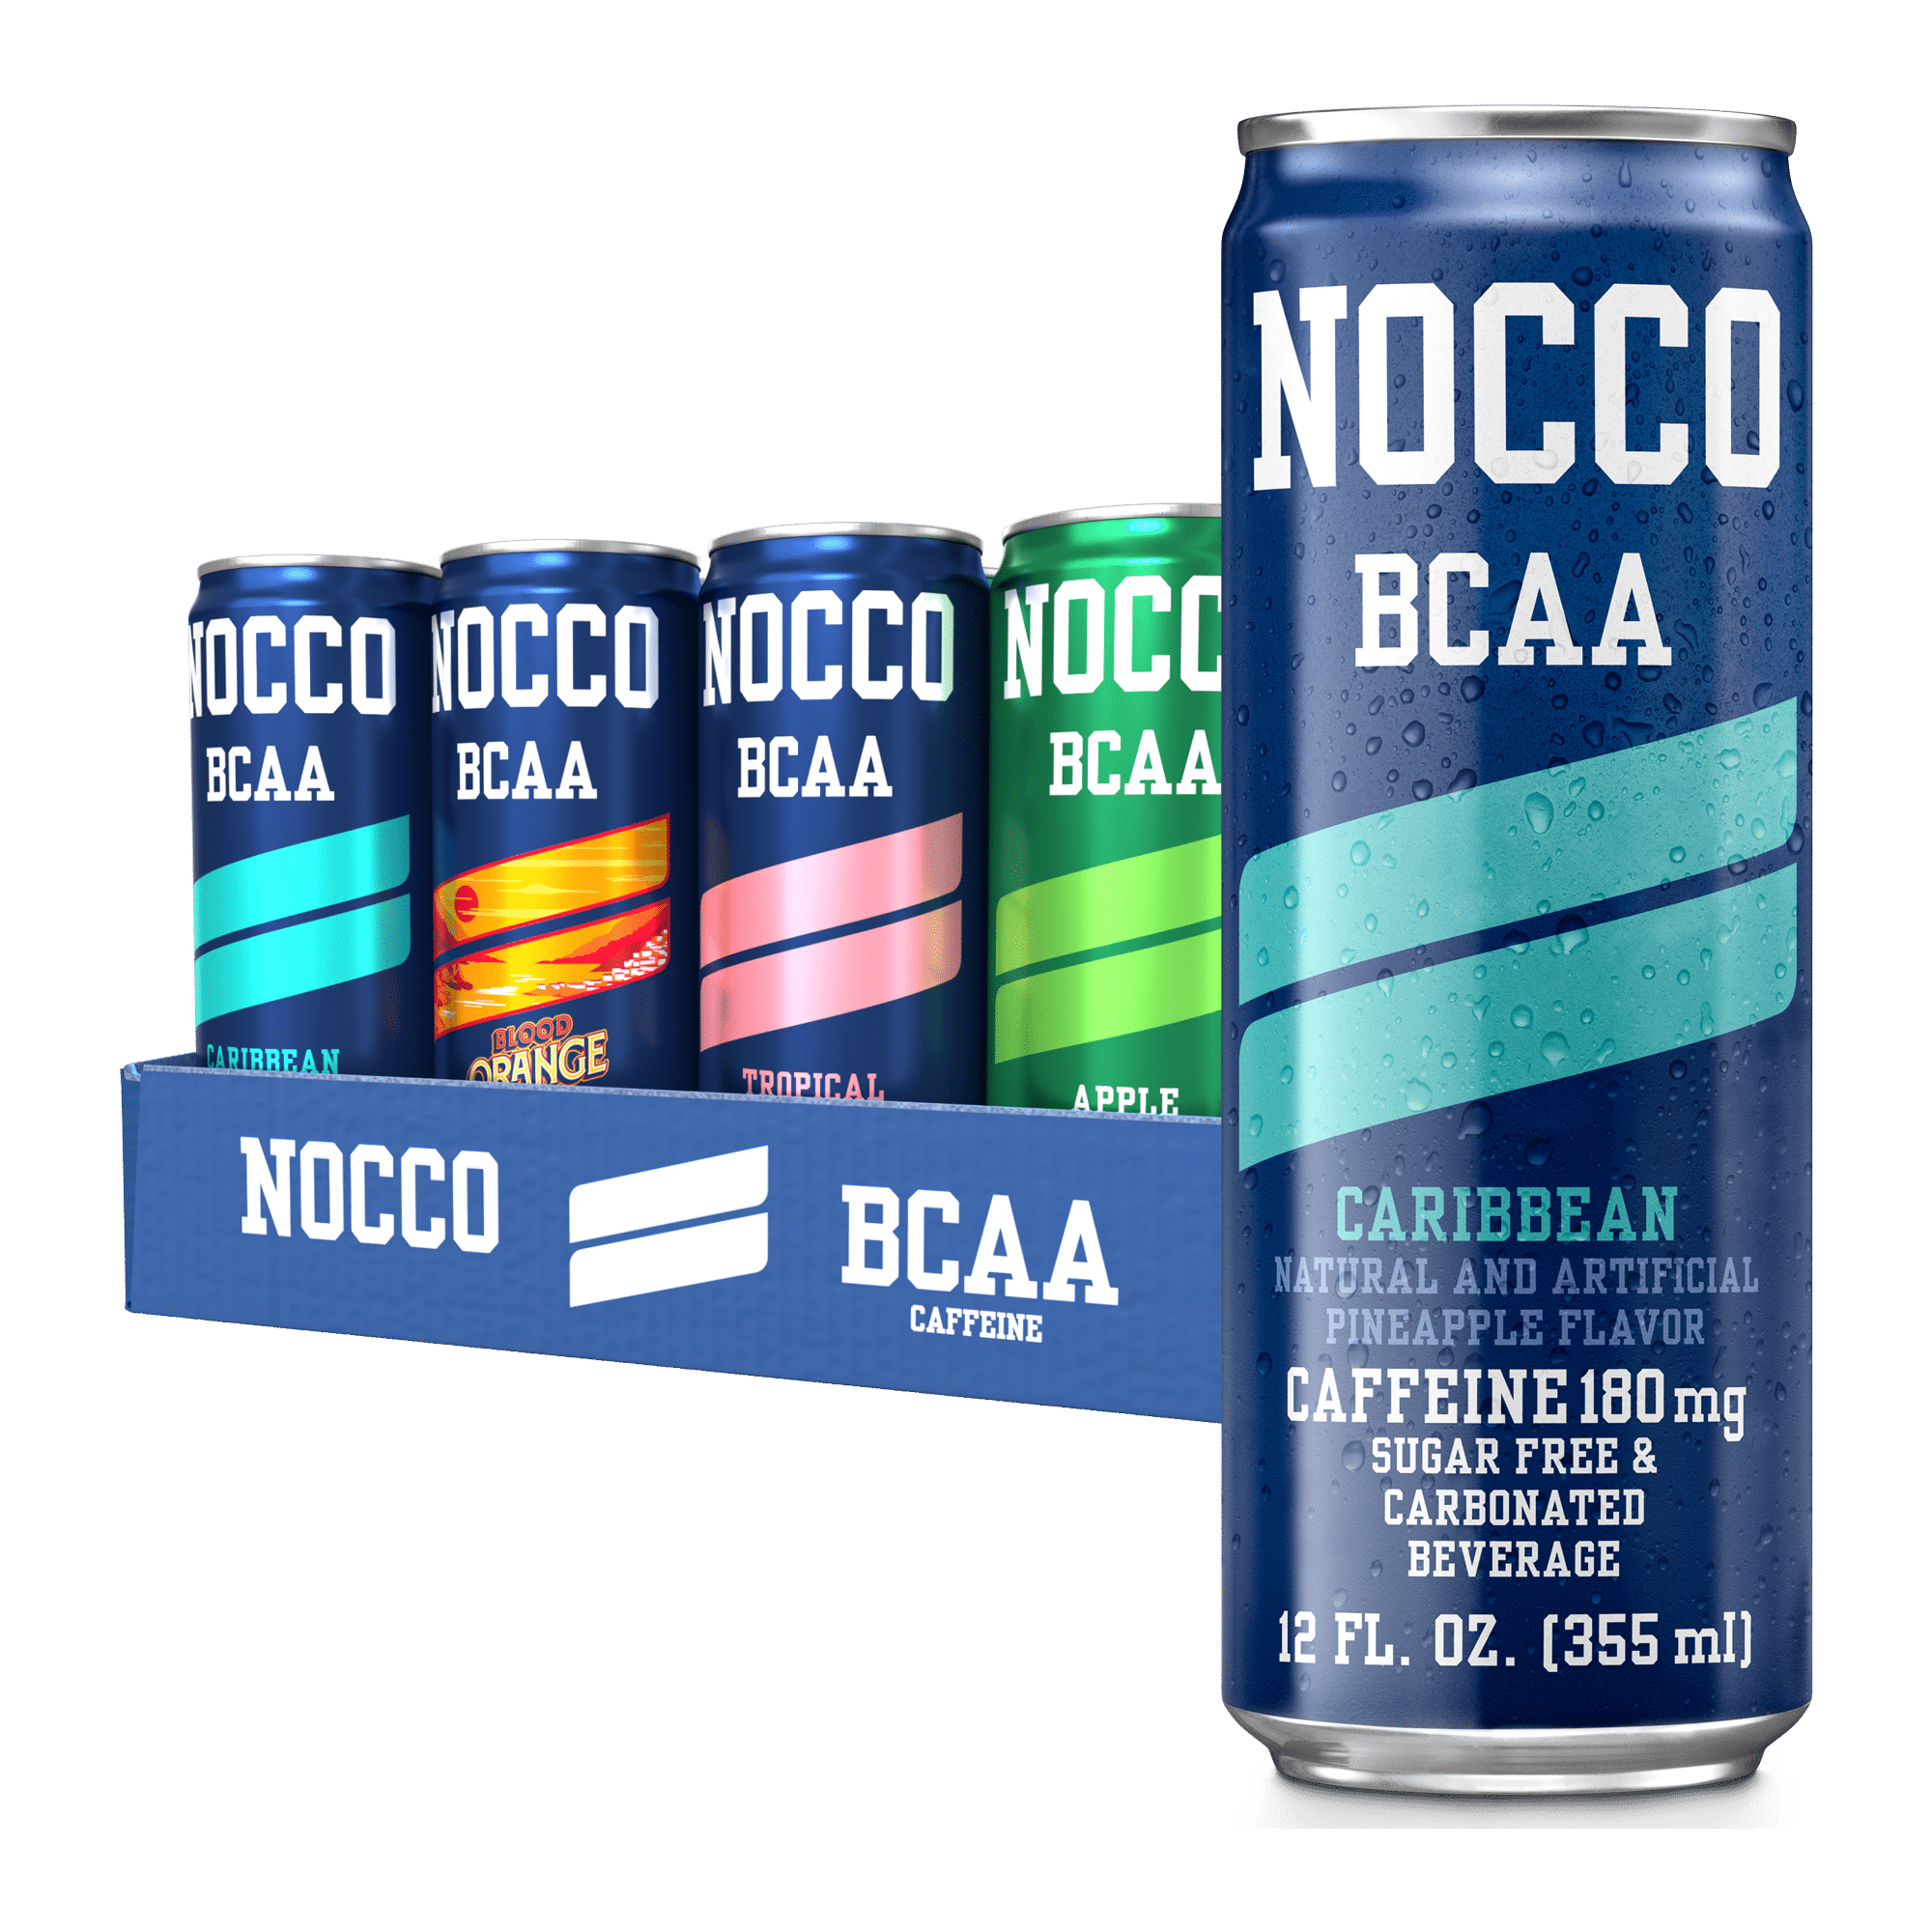 Nocco Bcaa Variety Pack 12 X 12 Fl Oz Carbonated, Zero Sugar, Lo